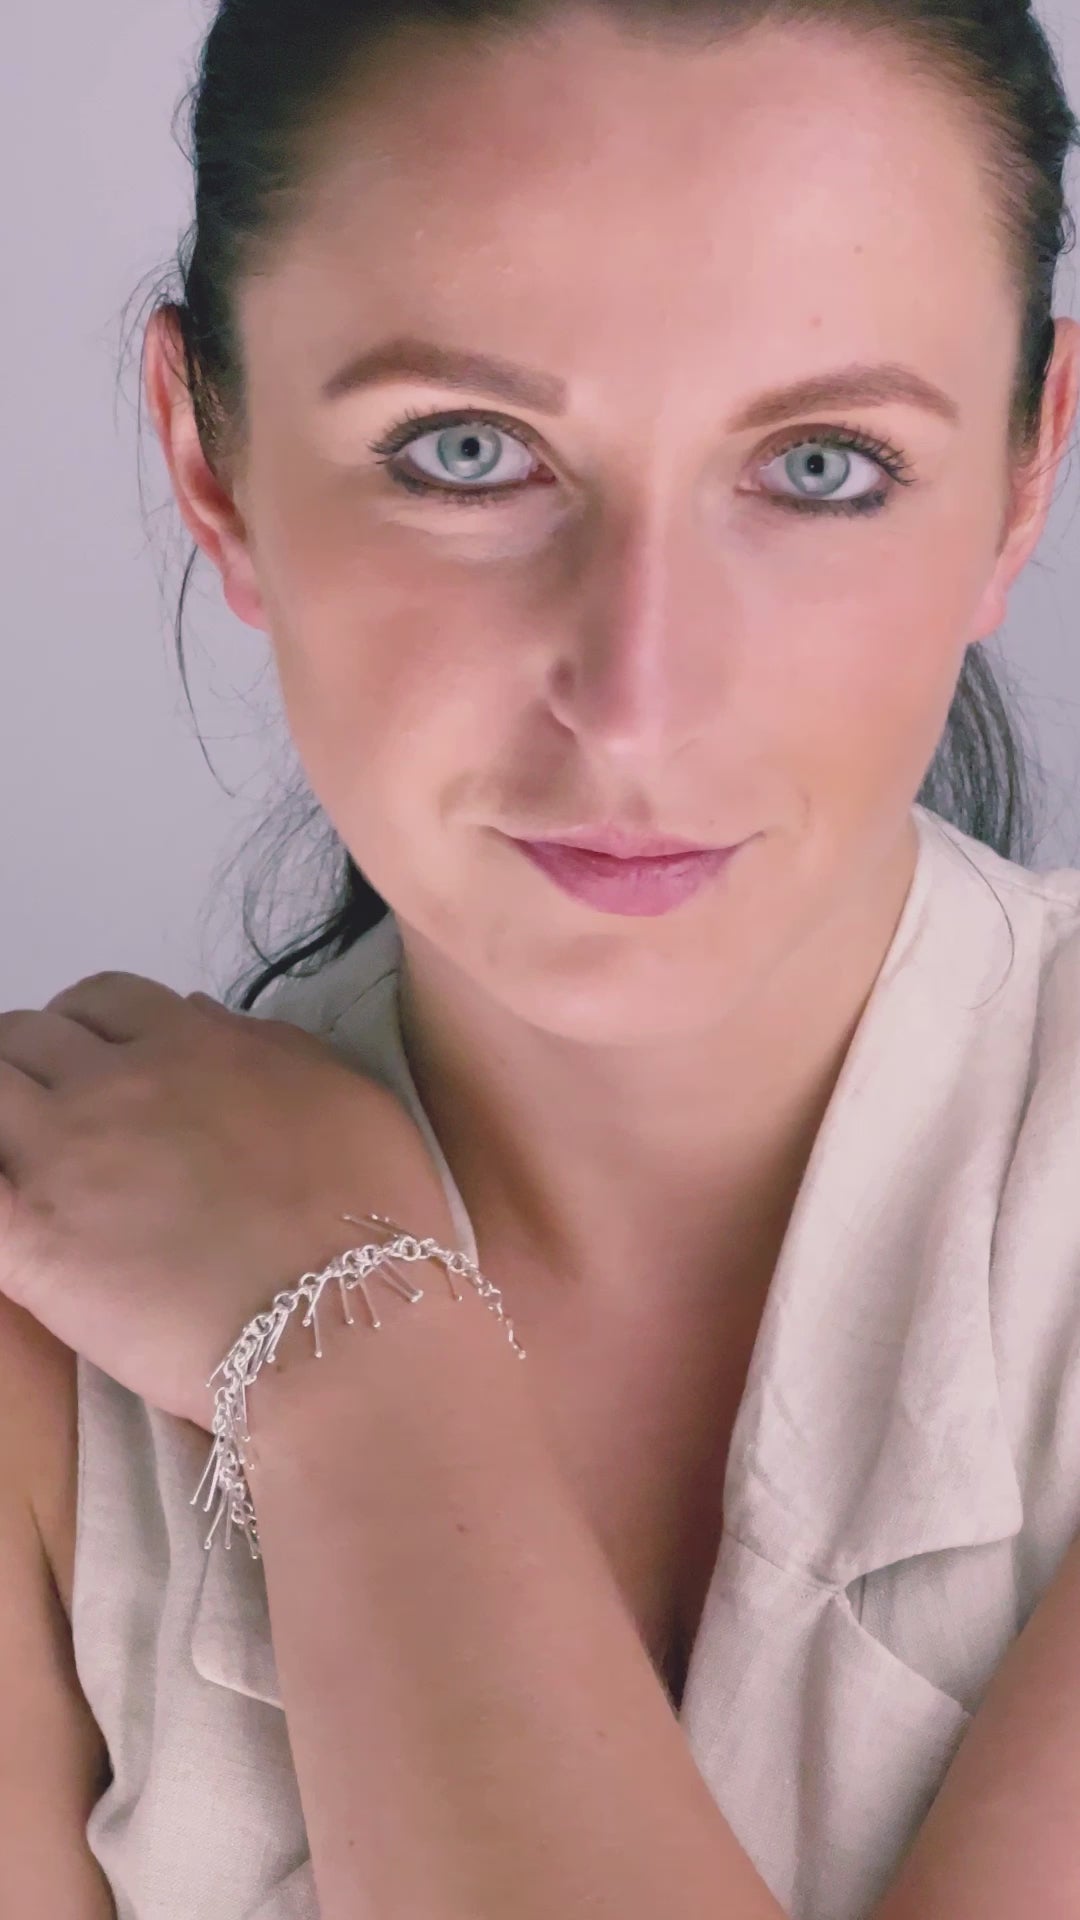 Sterling Silver Cluster Sticks Bracelet for Women